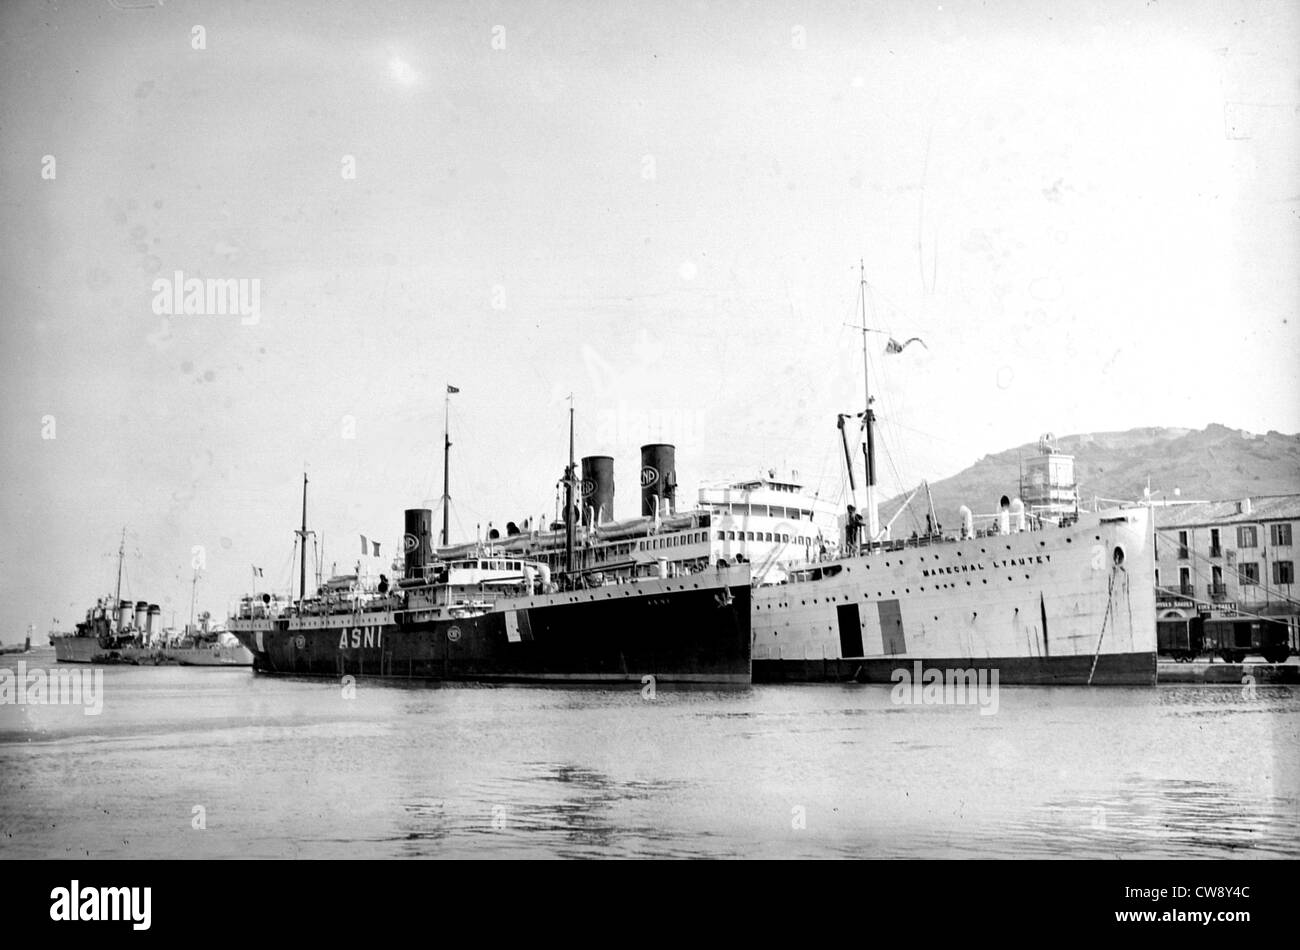 Spanish refugees. At Port-Vendres 'Maréchal Lyautey' hospital ship 'L'Asni' Stock Photo